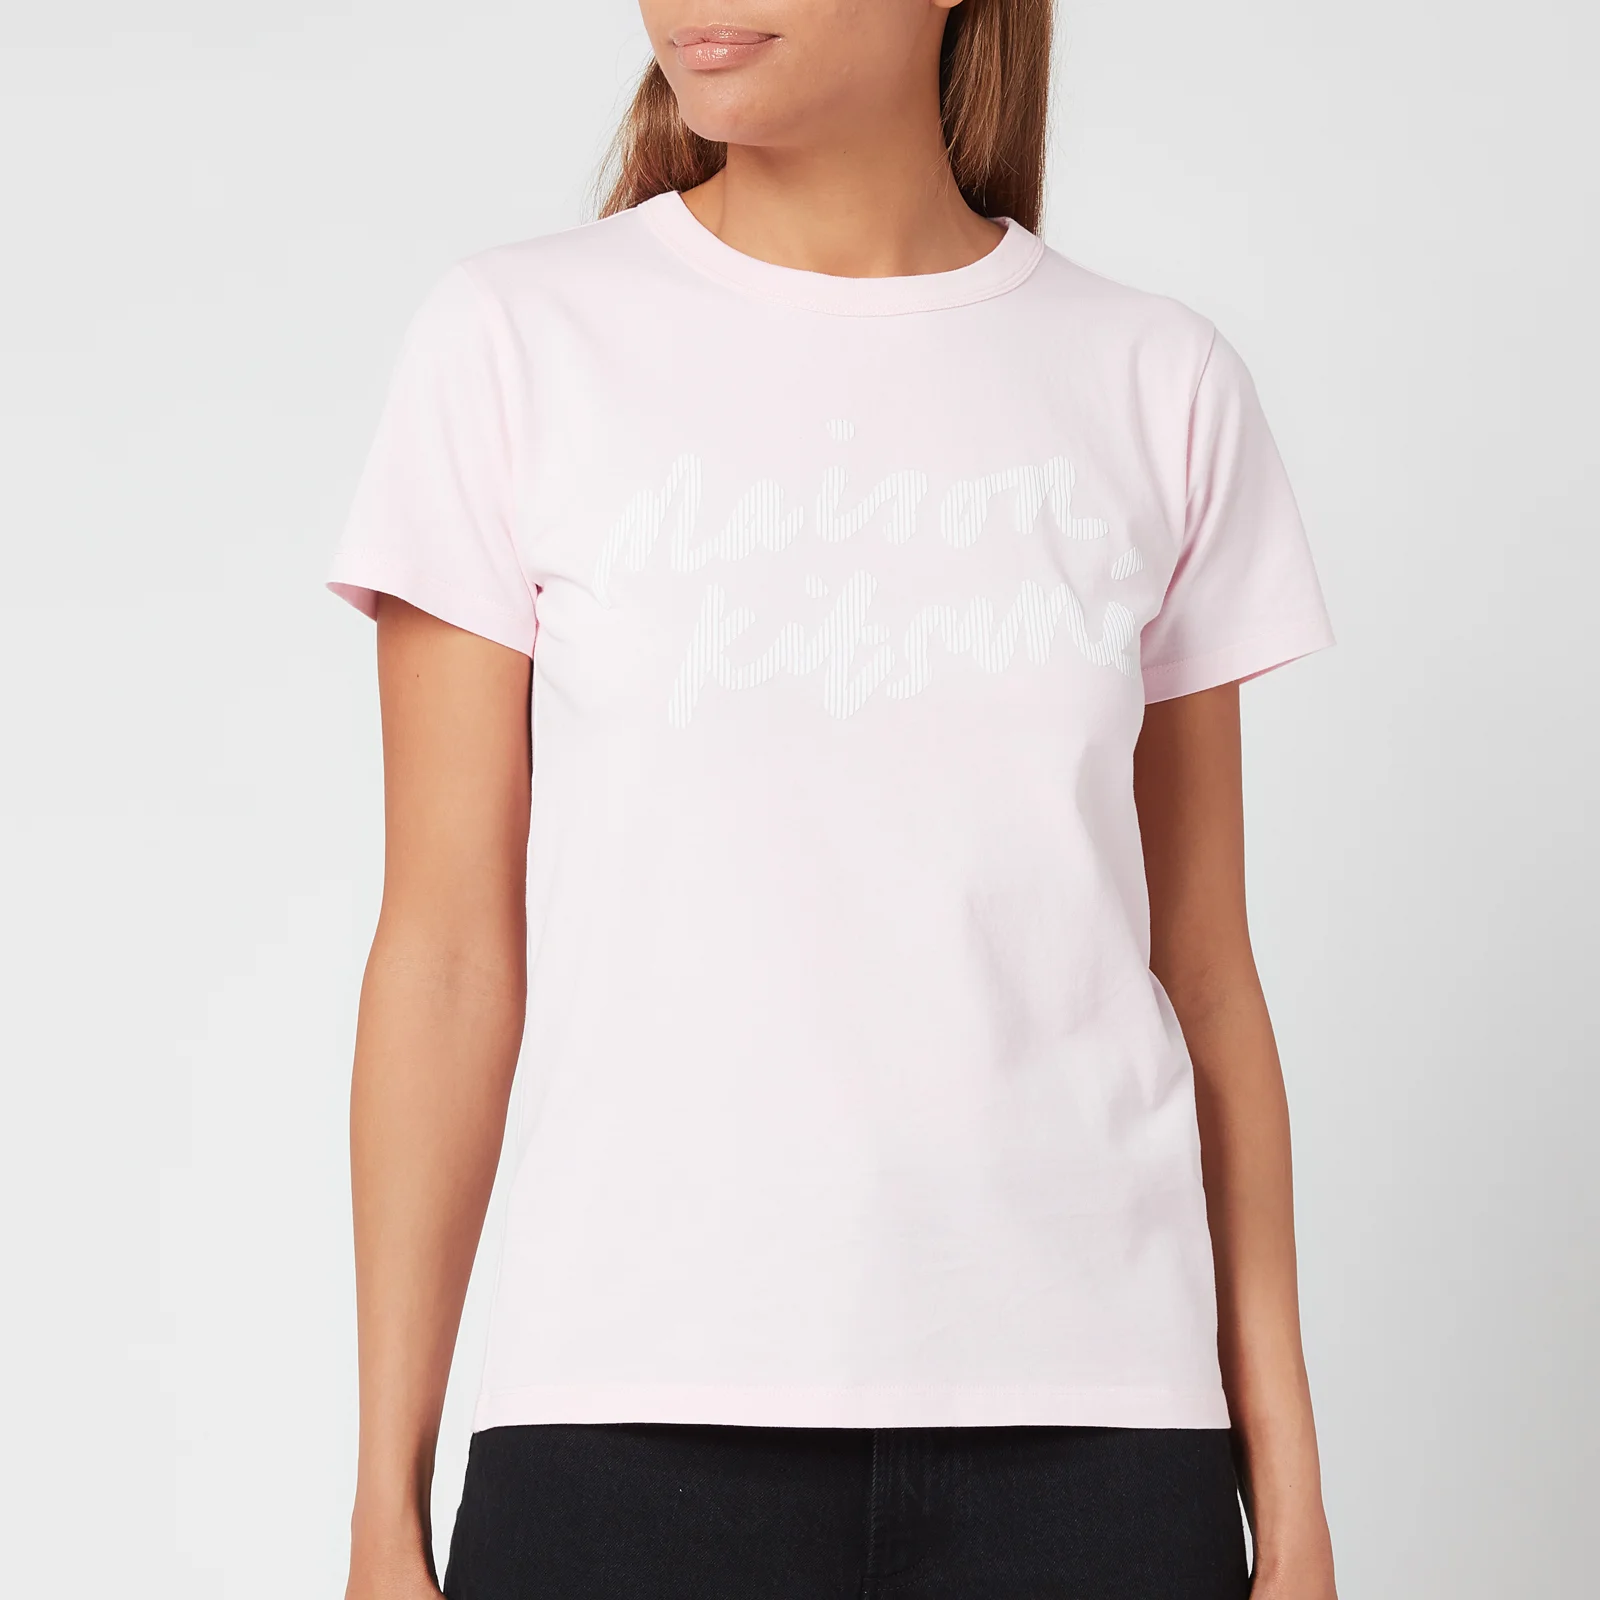 Maison Kitsuné Women's Handwriting Classic T-Shirt - Light Pink Image 1